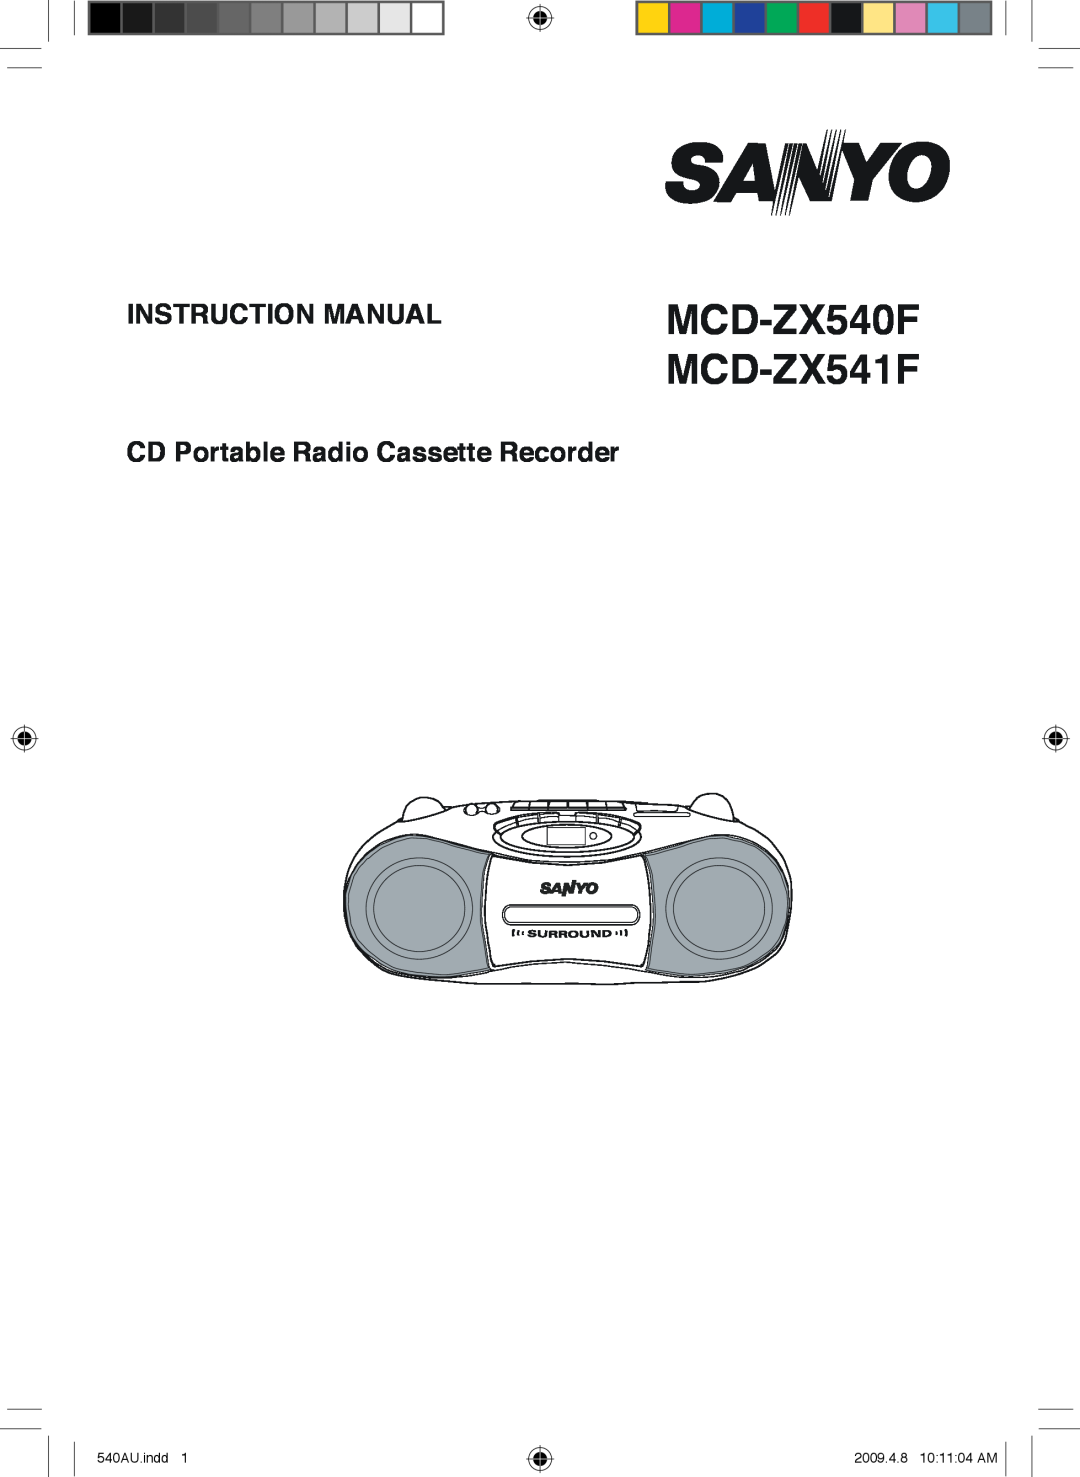 Sanyo instruction manual CD Portable Radio Cassette Recorder, MCD-ZX540F MCD-ZX541F, 540AU.indd, 2009.4.8 10 11 04 AM 